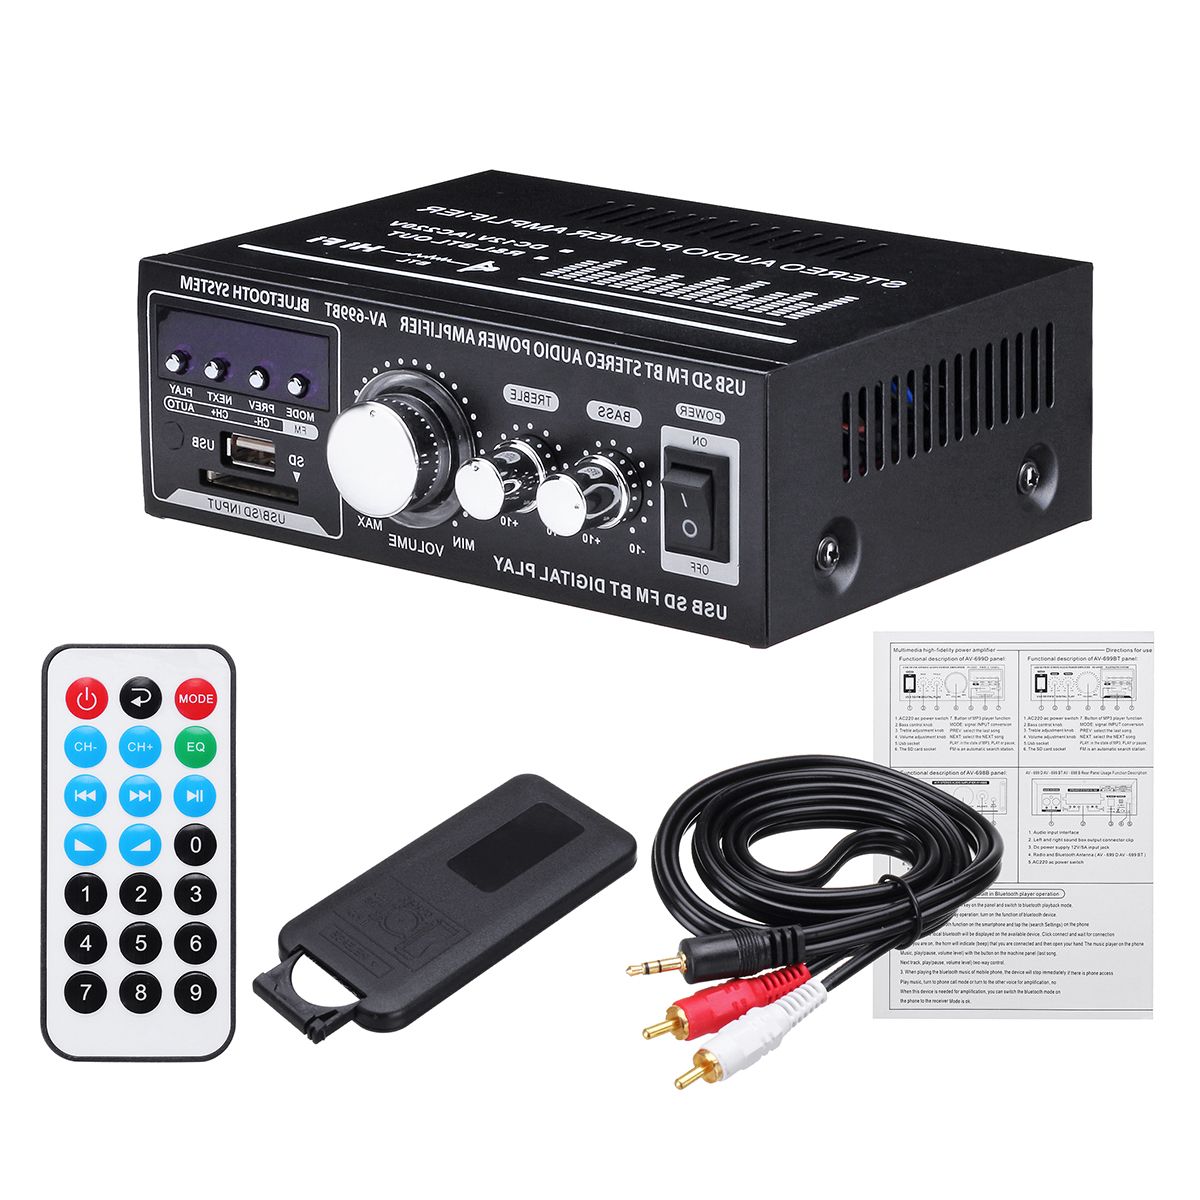 AV-699BT-400W-2CH-bluetooth-Home-HiFi--Stereo-Power-Amplifier-Support-USB-Memory-Card-FM-Radio-220V-1610736